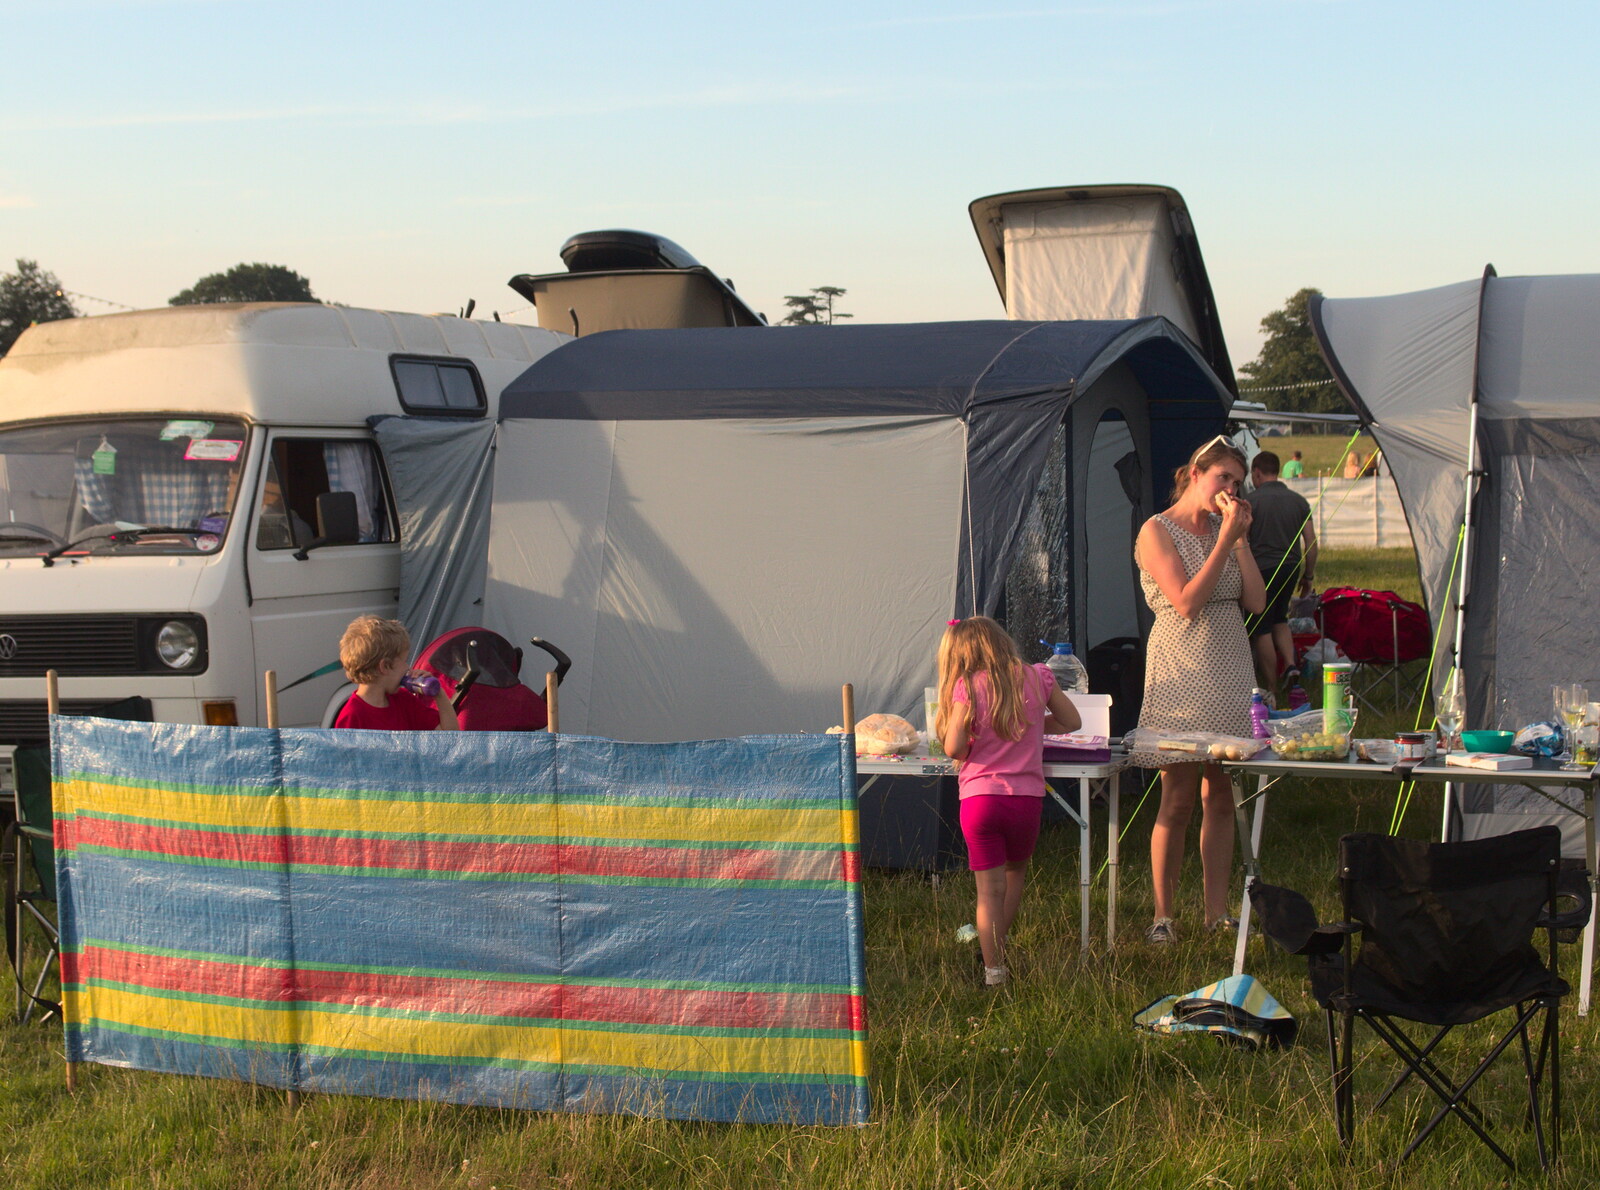 Our encampment from Latitude Festival, Henham Park, Southwold, Suffolk - 17th July 2014